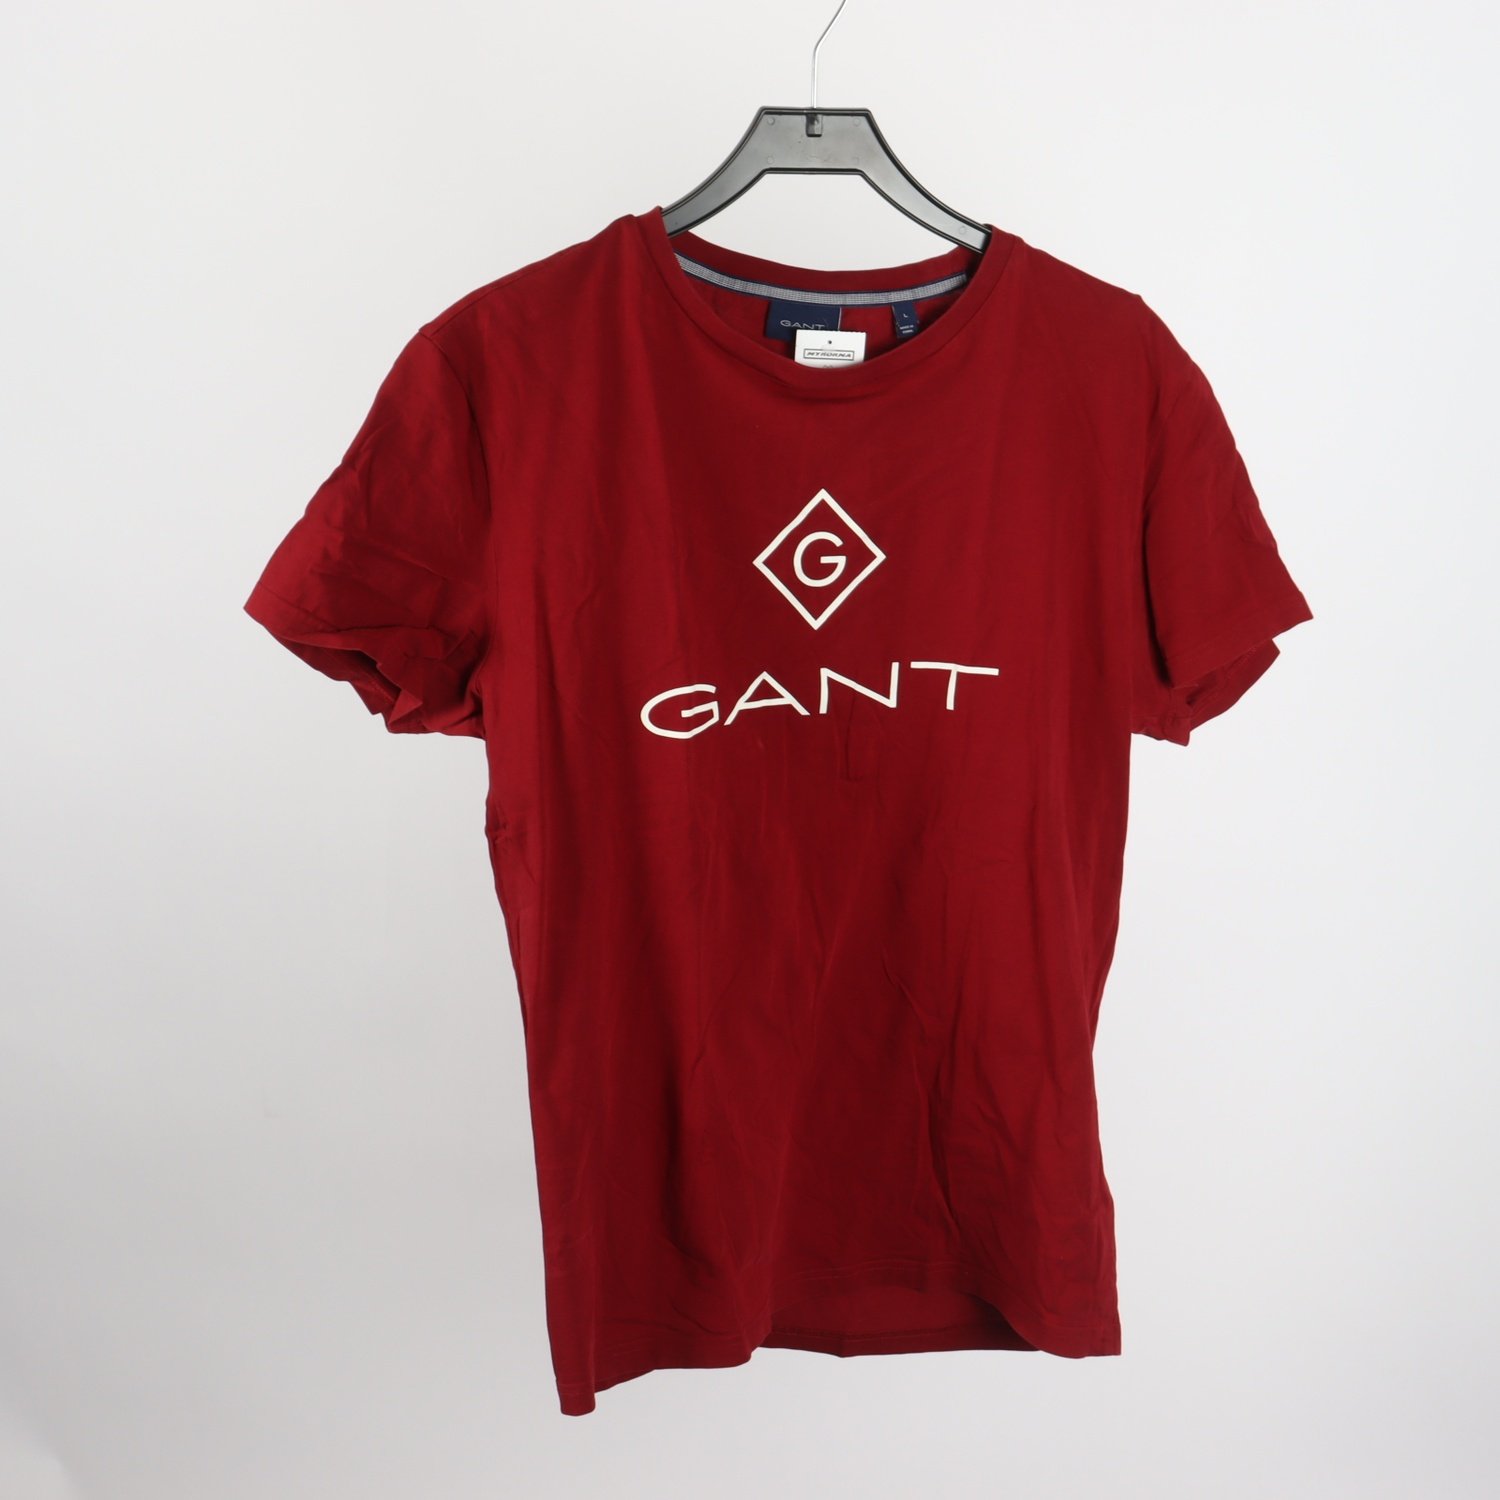 T-shirt, GANT, vinröd, stl. L